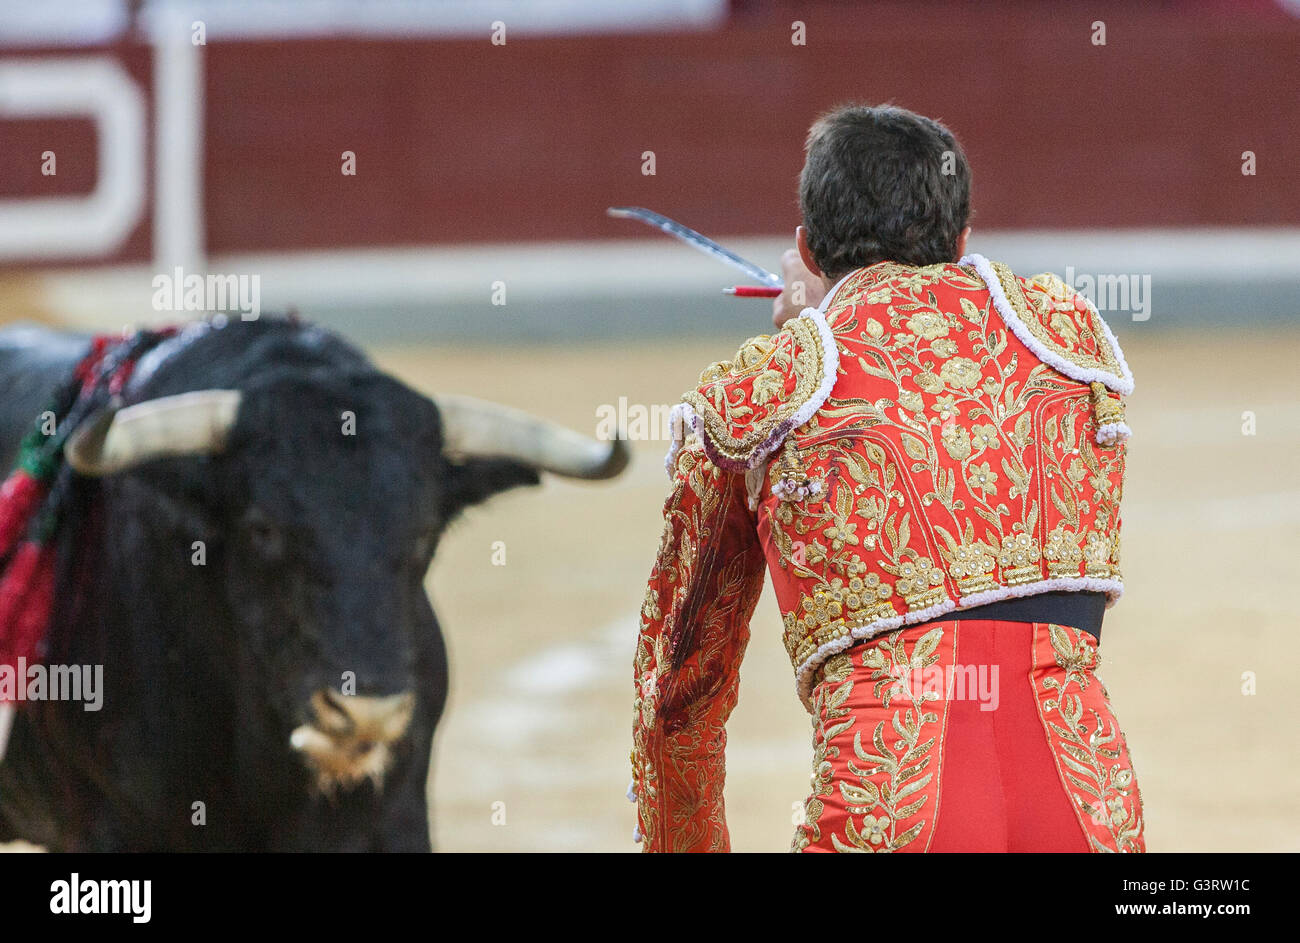 The Spanish Bullfighter David Fandila El Fandi preparing to enter to kill  the bull in the Bullring of Pozoblanco, Spain Stock Photo - Alamy